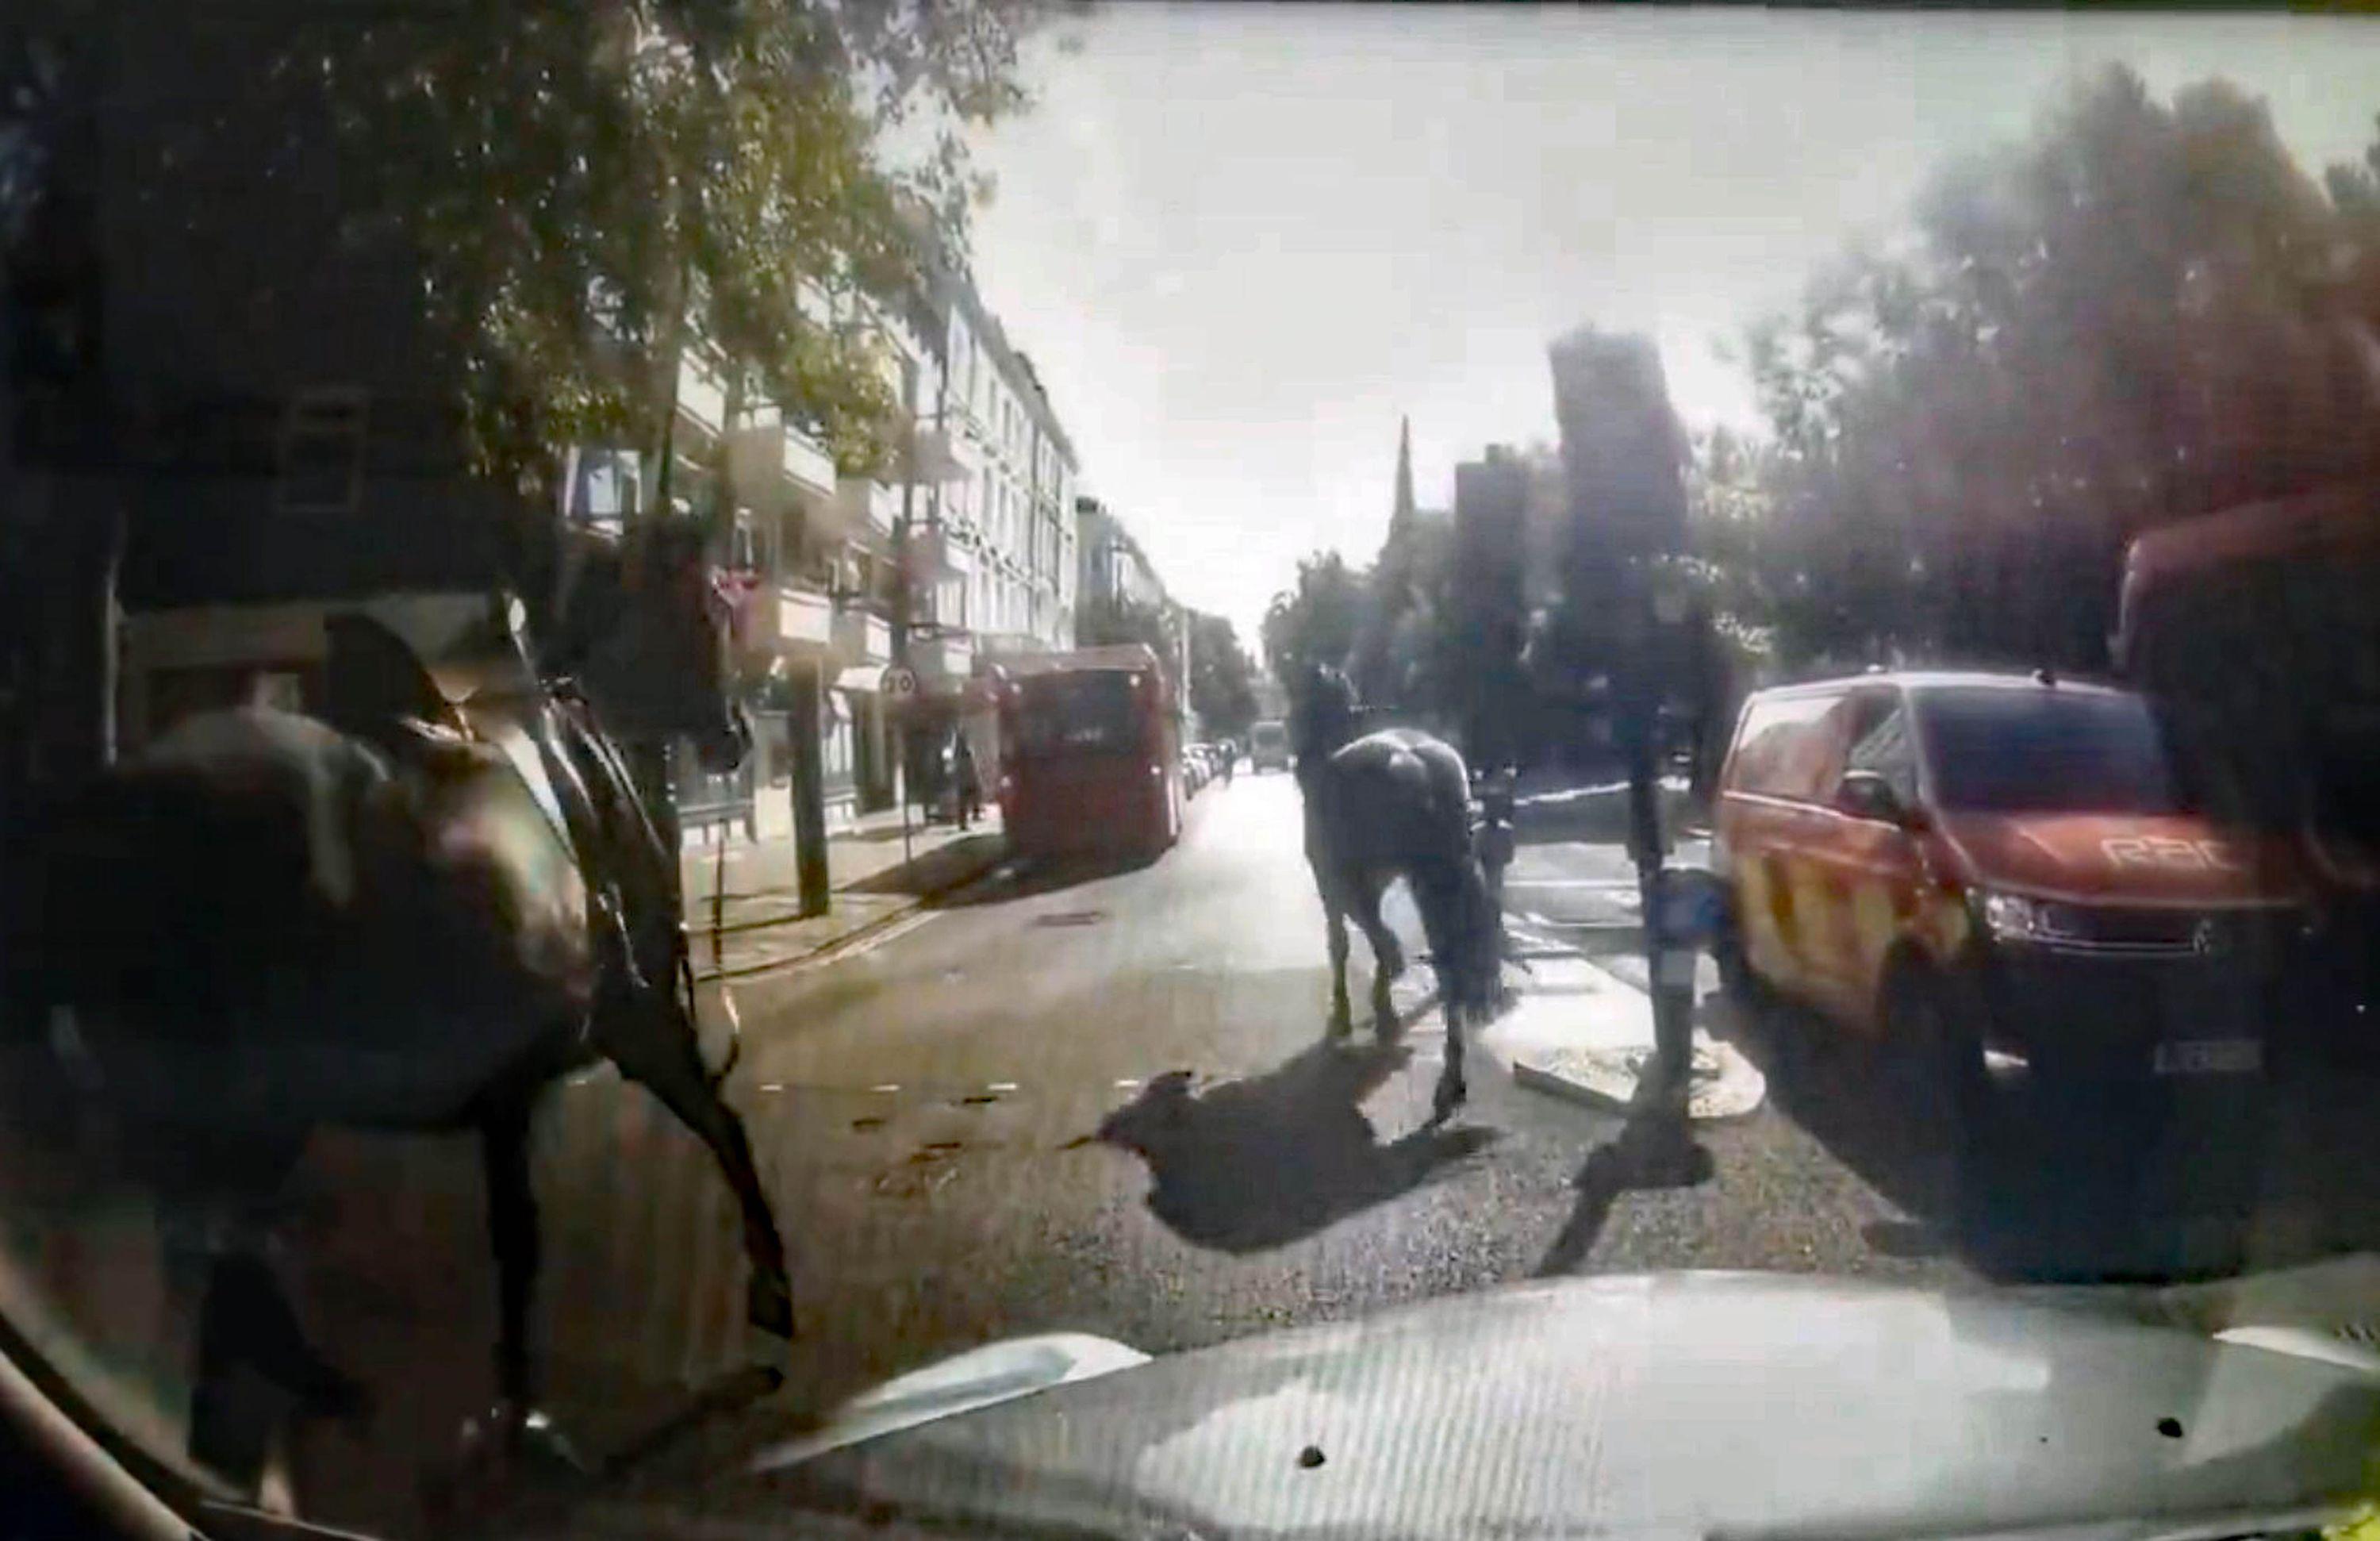 Military horses run loose again in central London